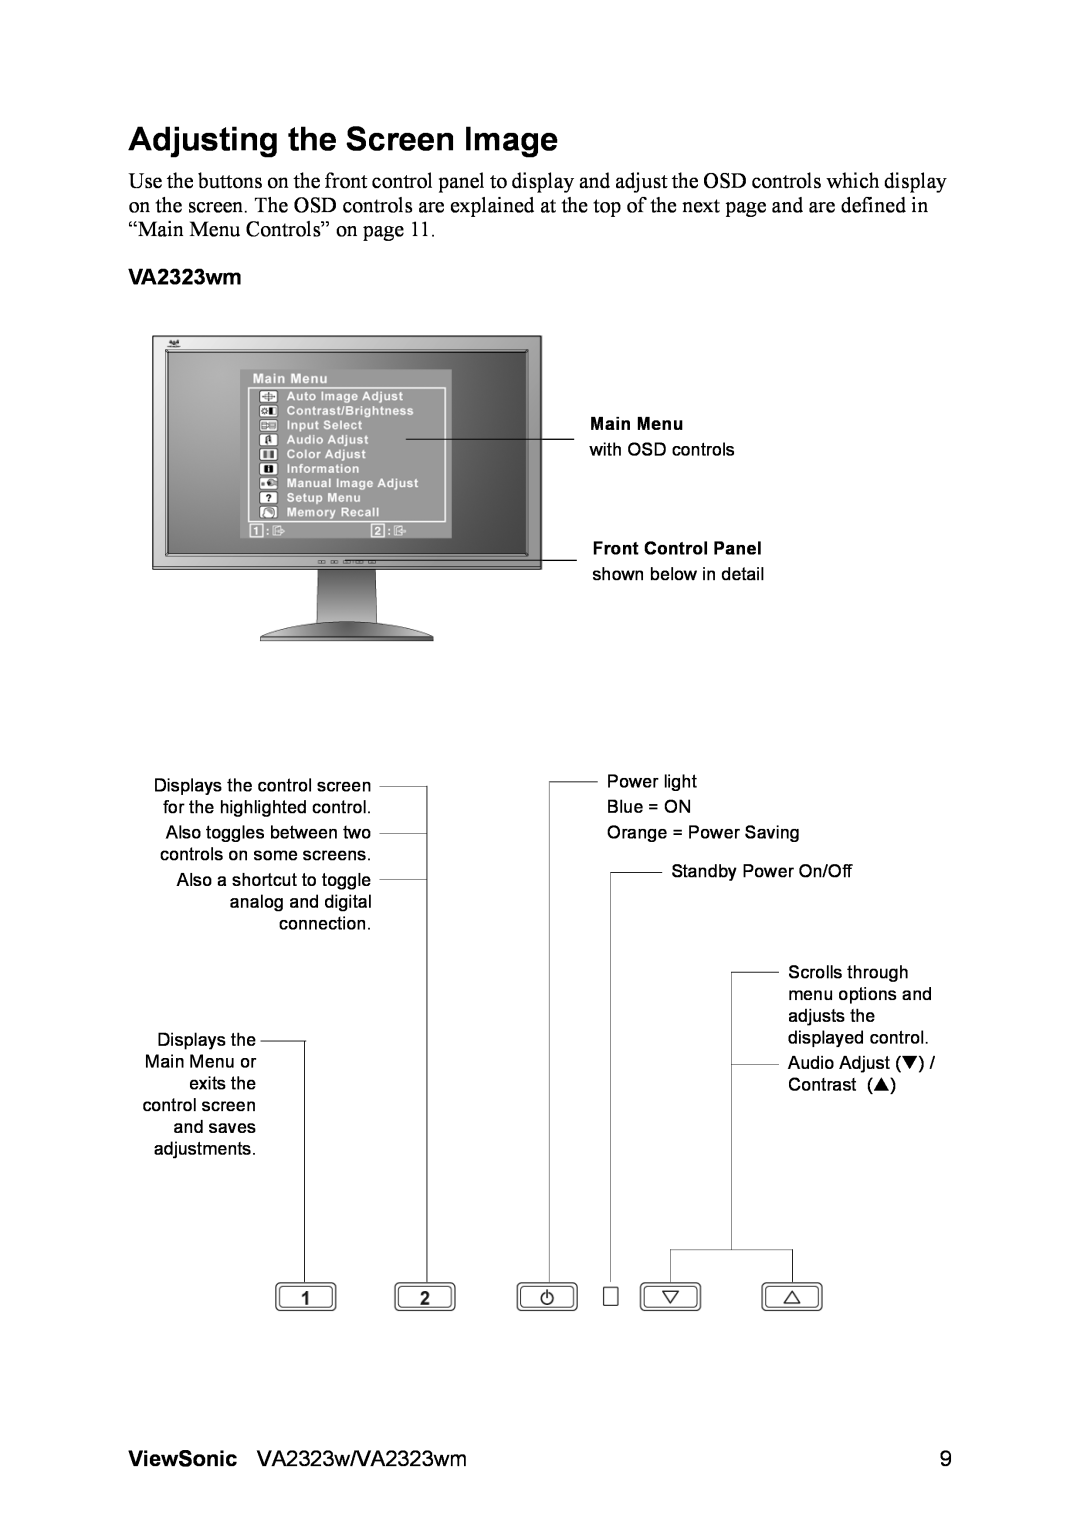 ViewSonic VS12575 warranty Adjusting the Screen Image, VA2323wm, Main Menu, Front Control Panel 